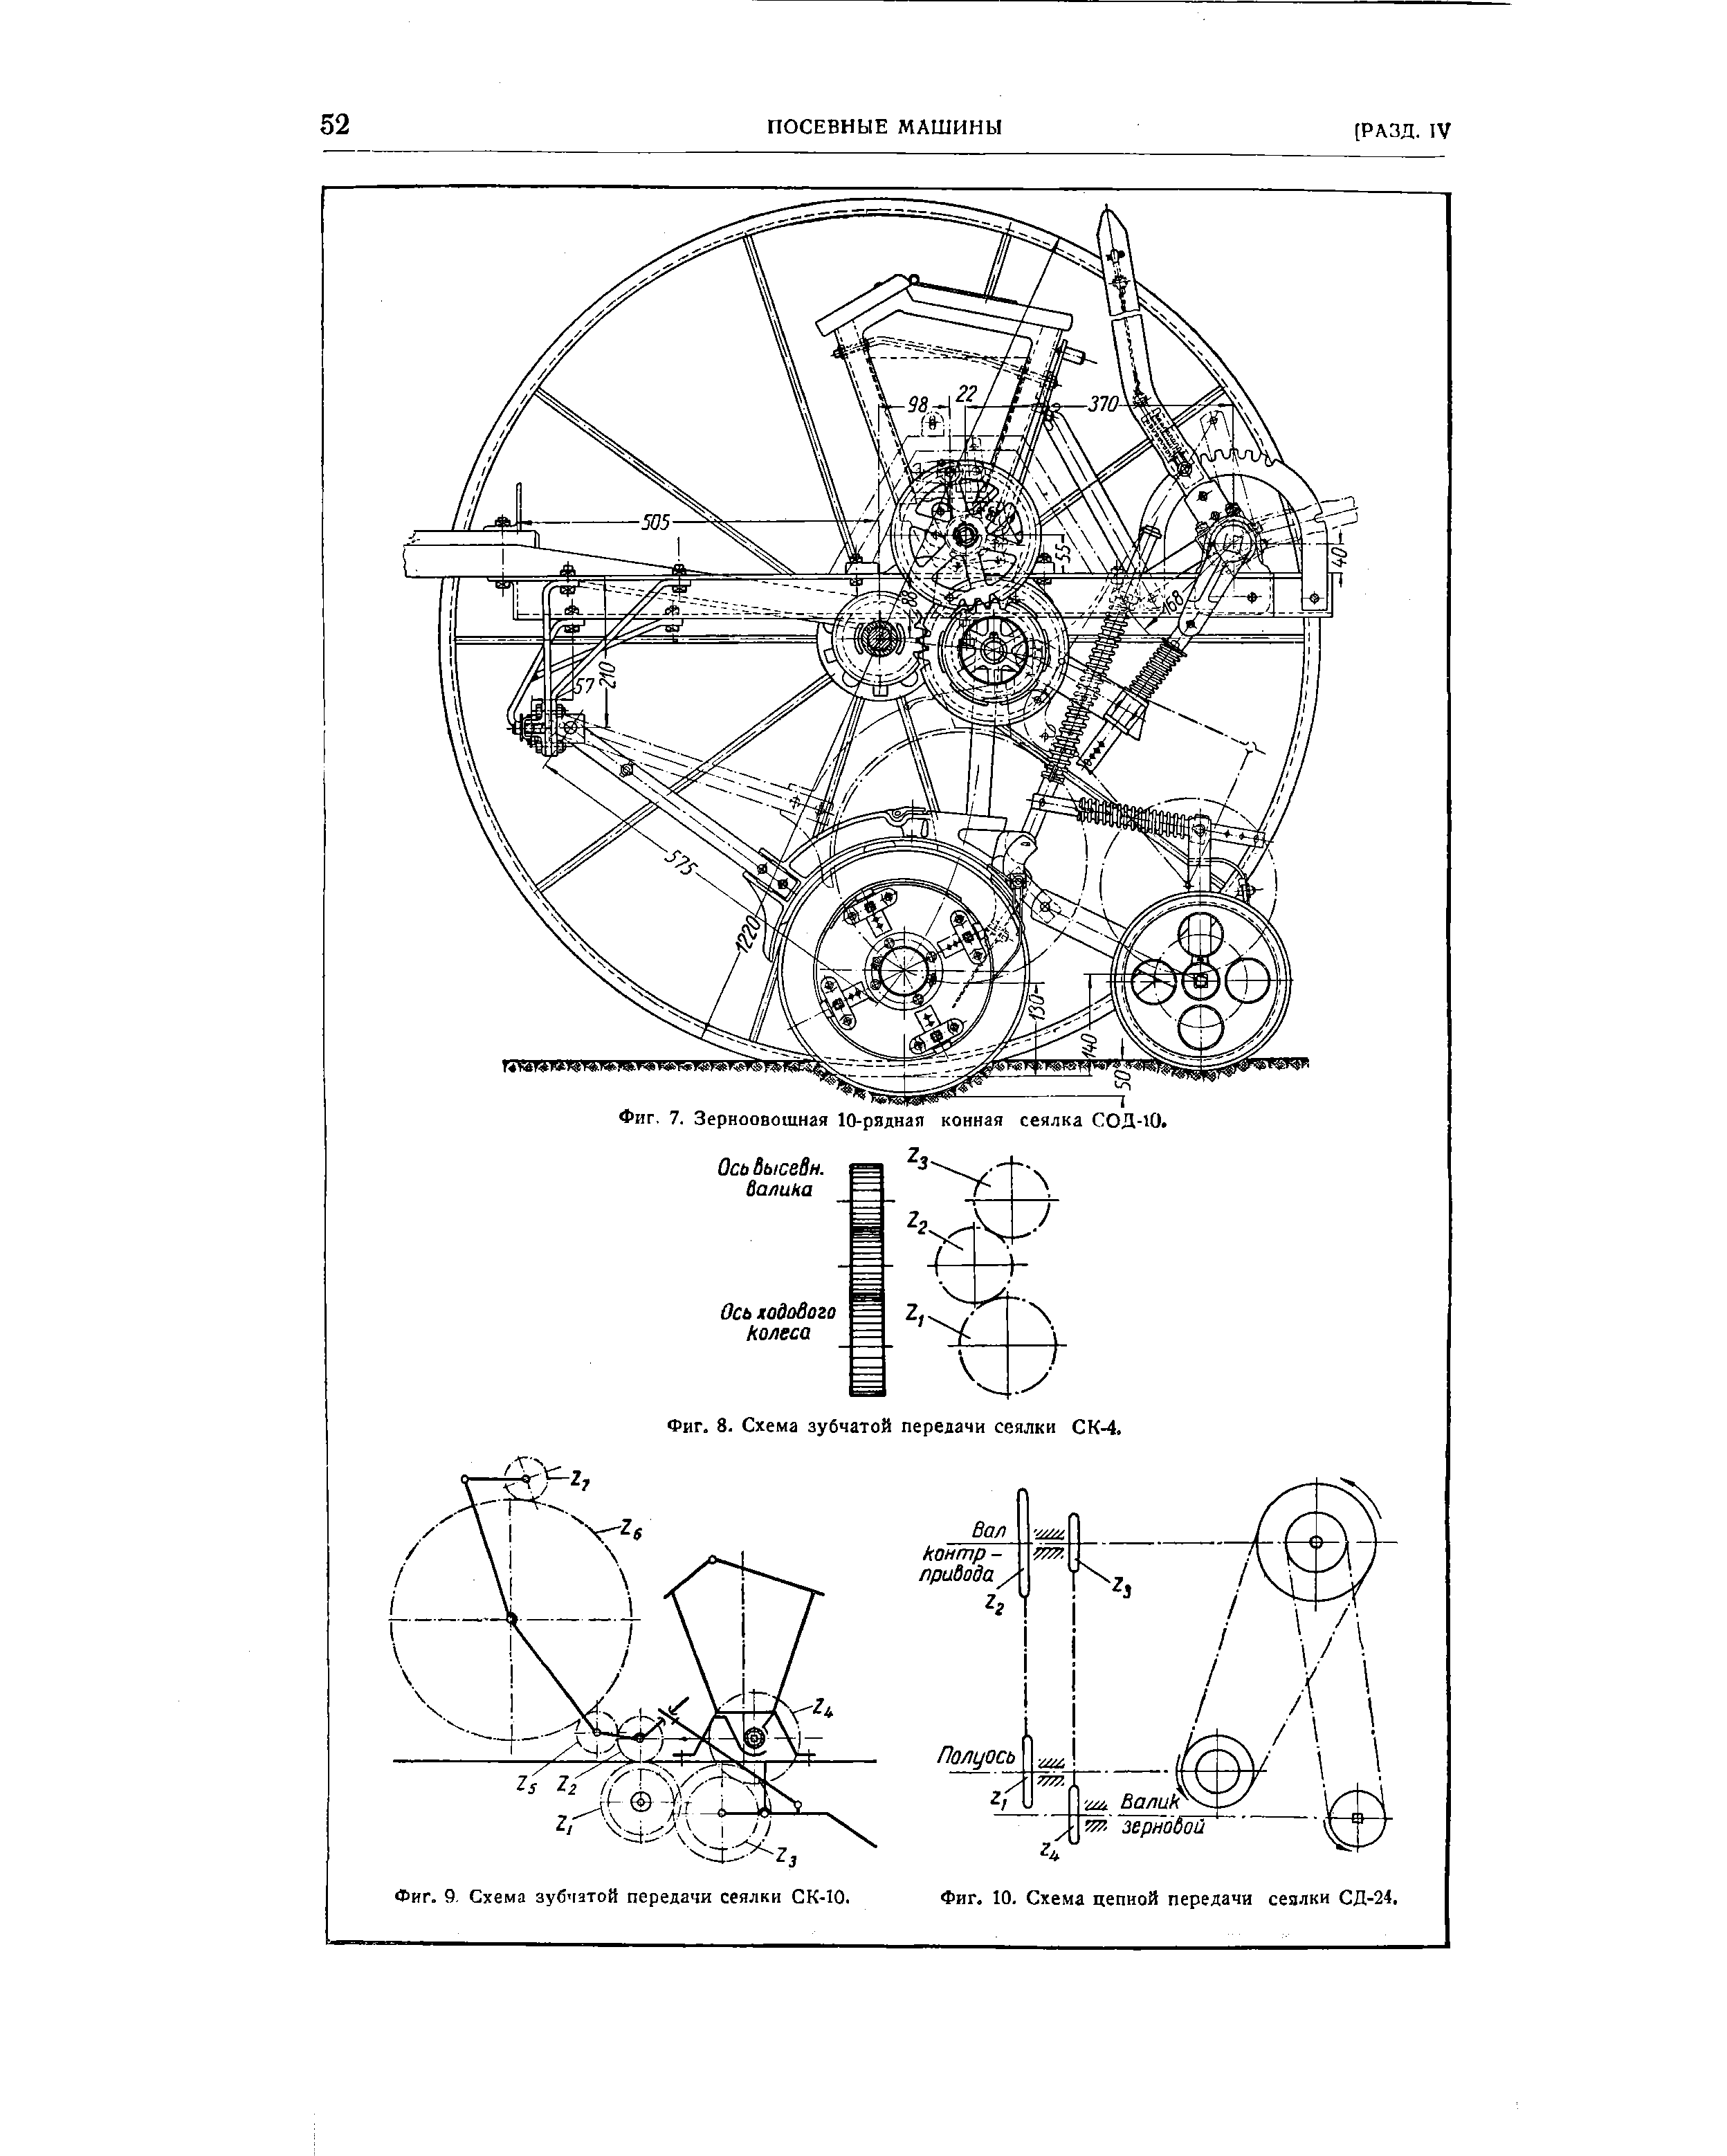 Фиг. 10. Схема цепной передачи сеялки СД-24.
